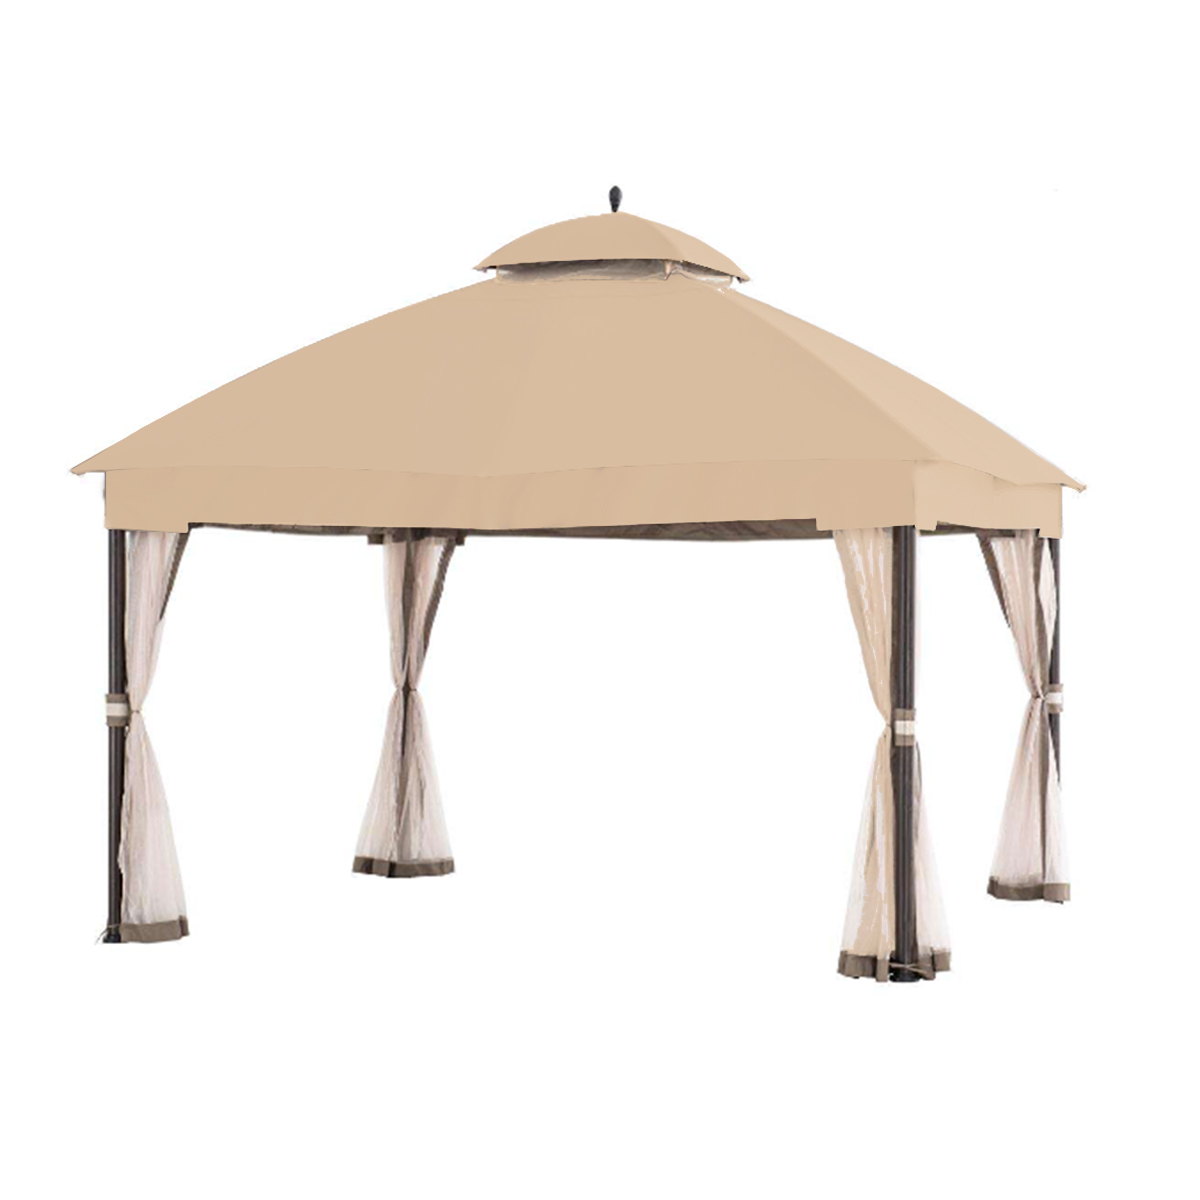 Replacement Canopy for LA Fabric Domed Gazebo - RipLock 350